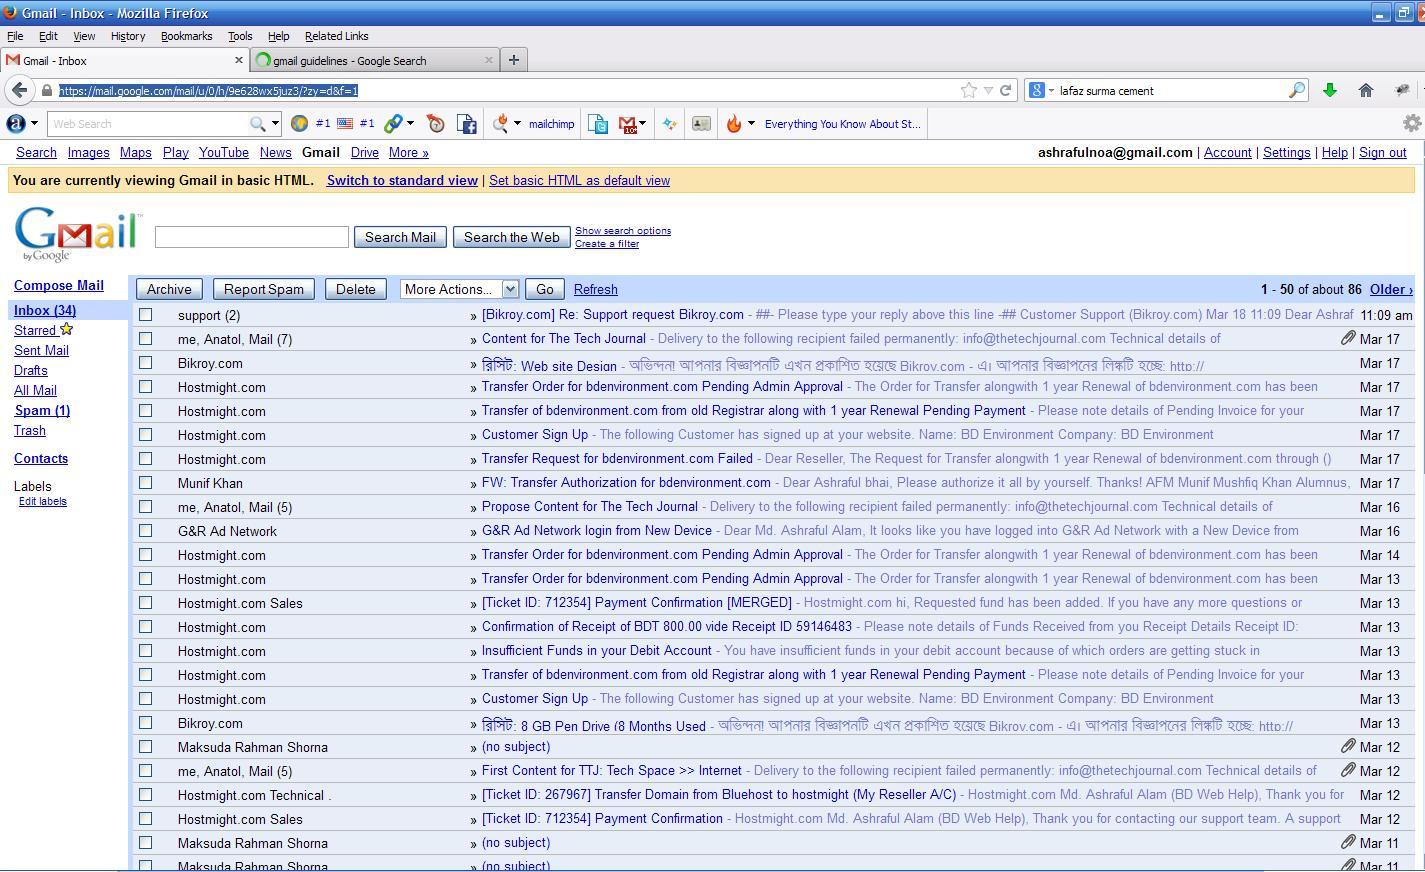 Interface of Basic Gmail, Image Credit: Screenshot - The Tech Journal